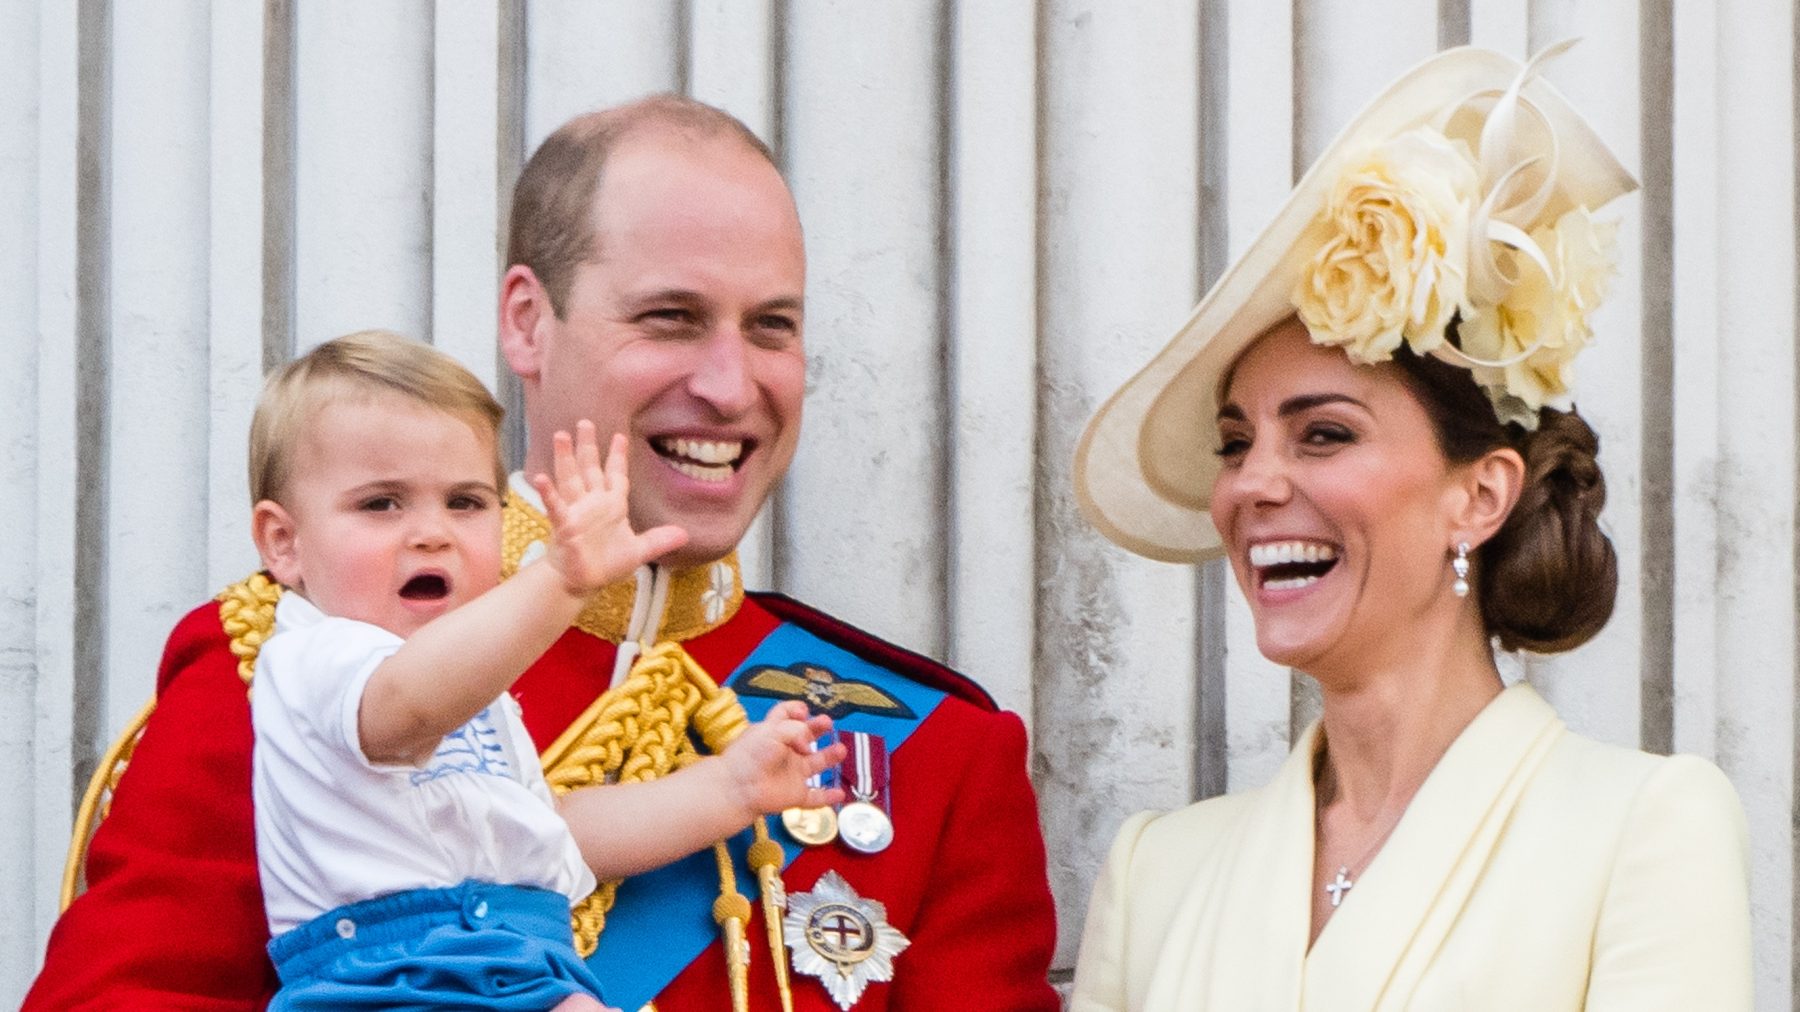 Must-see royalty-documentaire geeft exclusieve inkijk in leven toekomstig Brits koningspaar